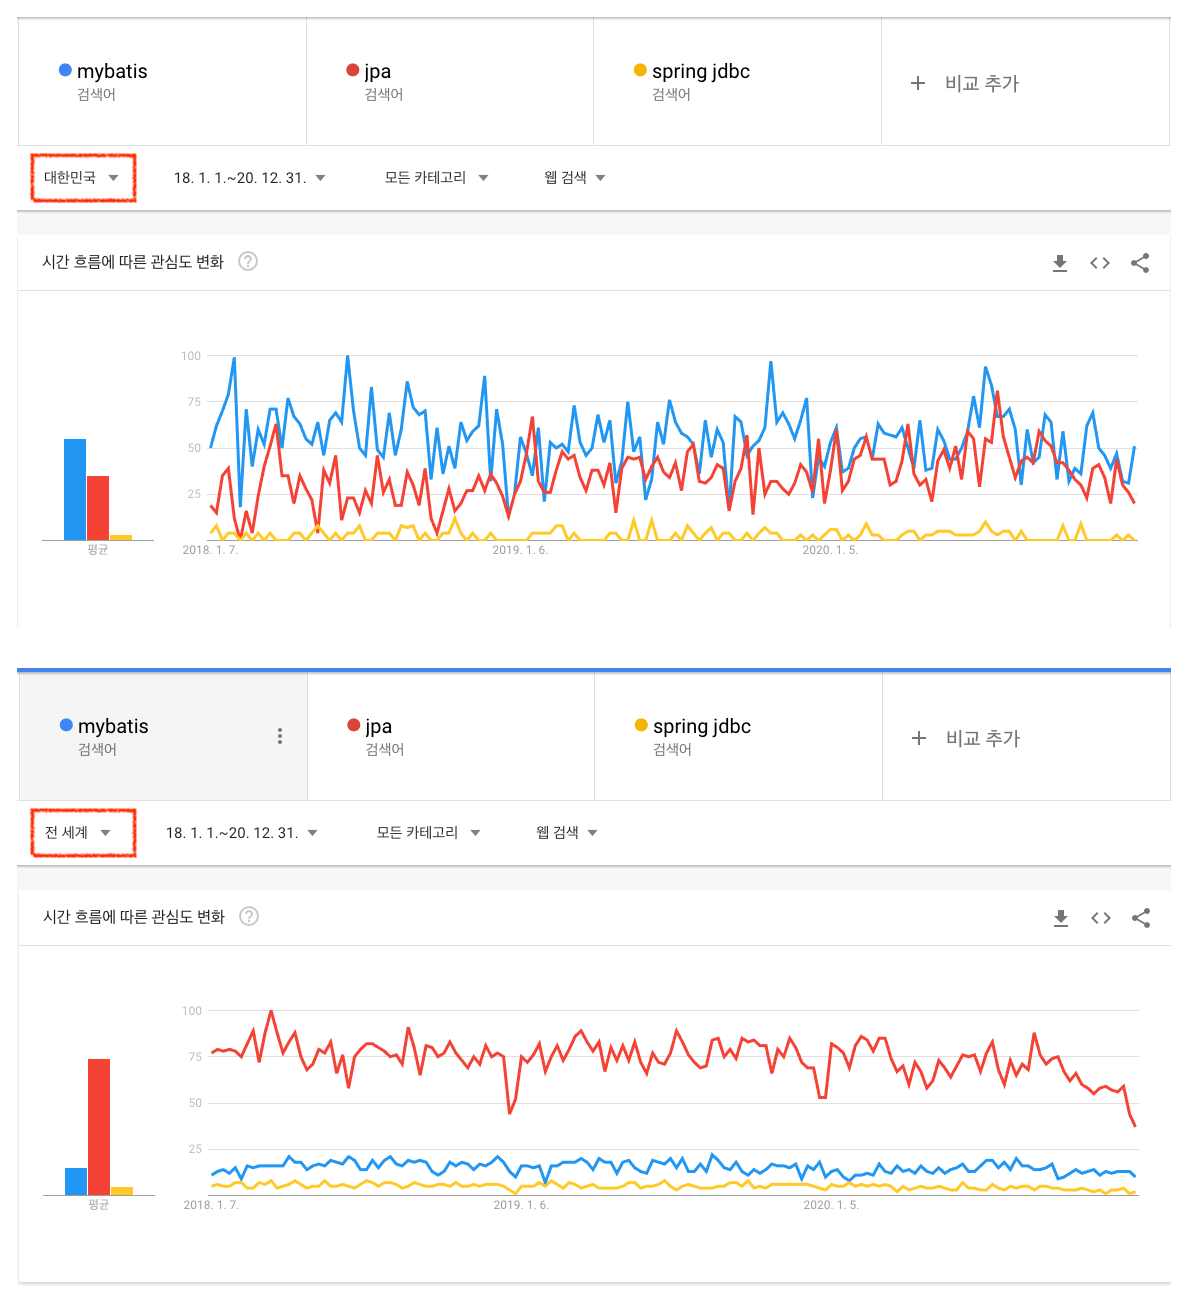 mybatis, jpa and spring jdbc in google trends